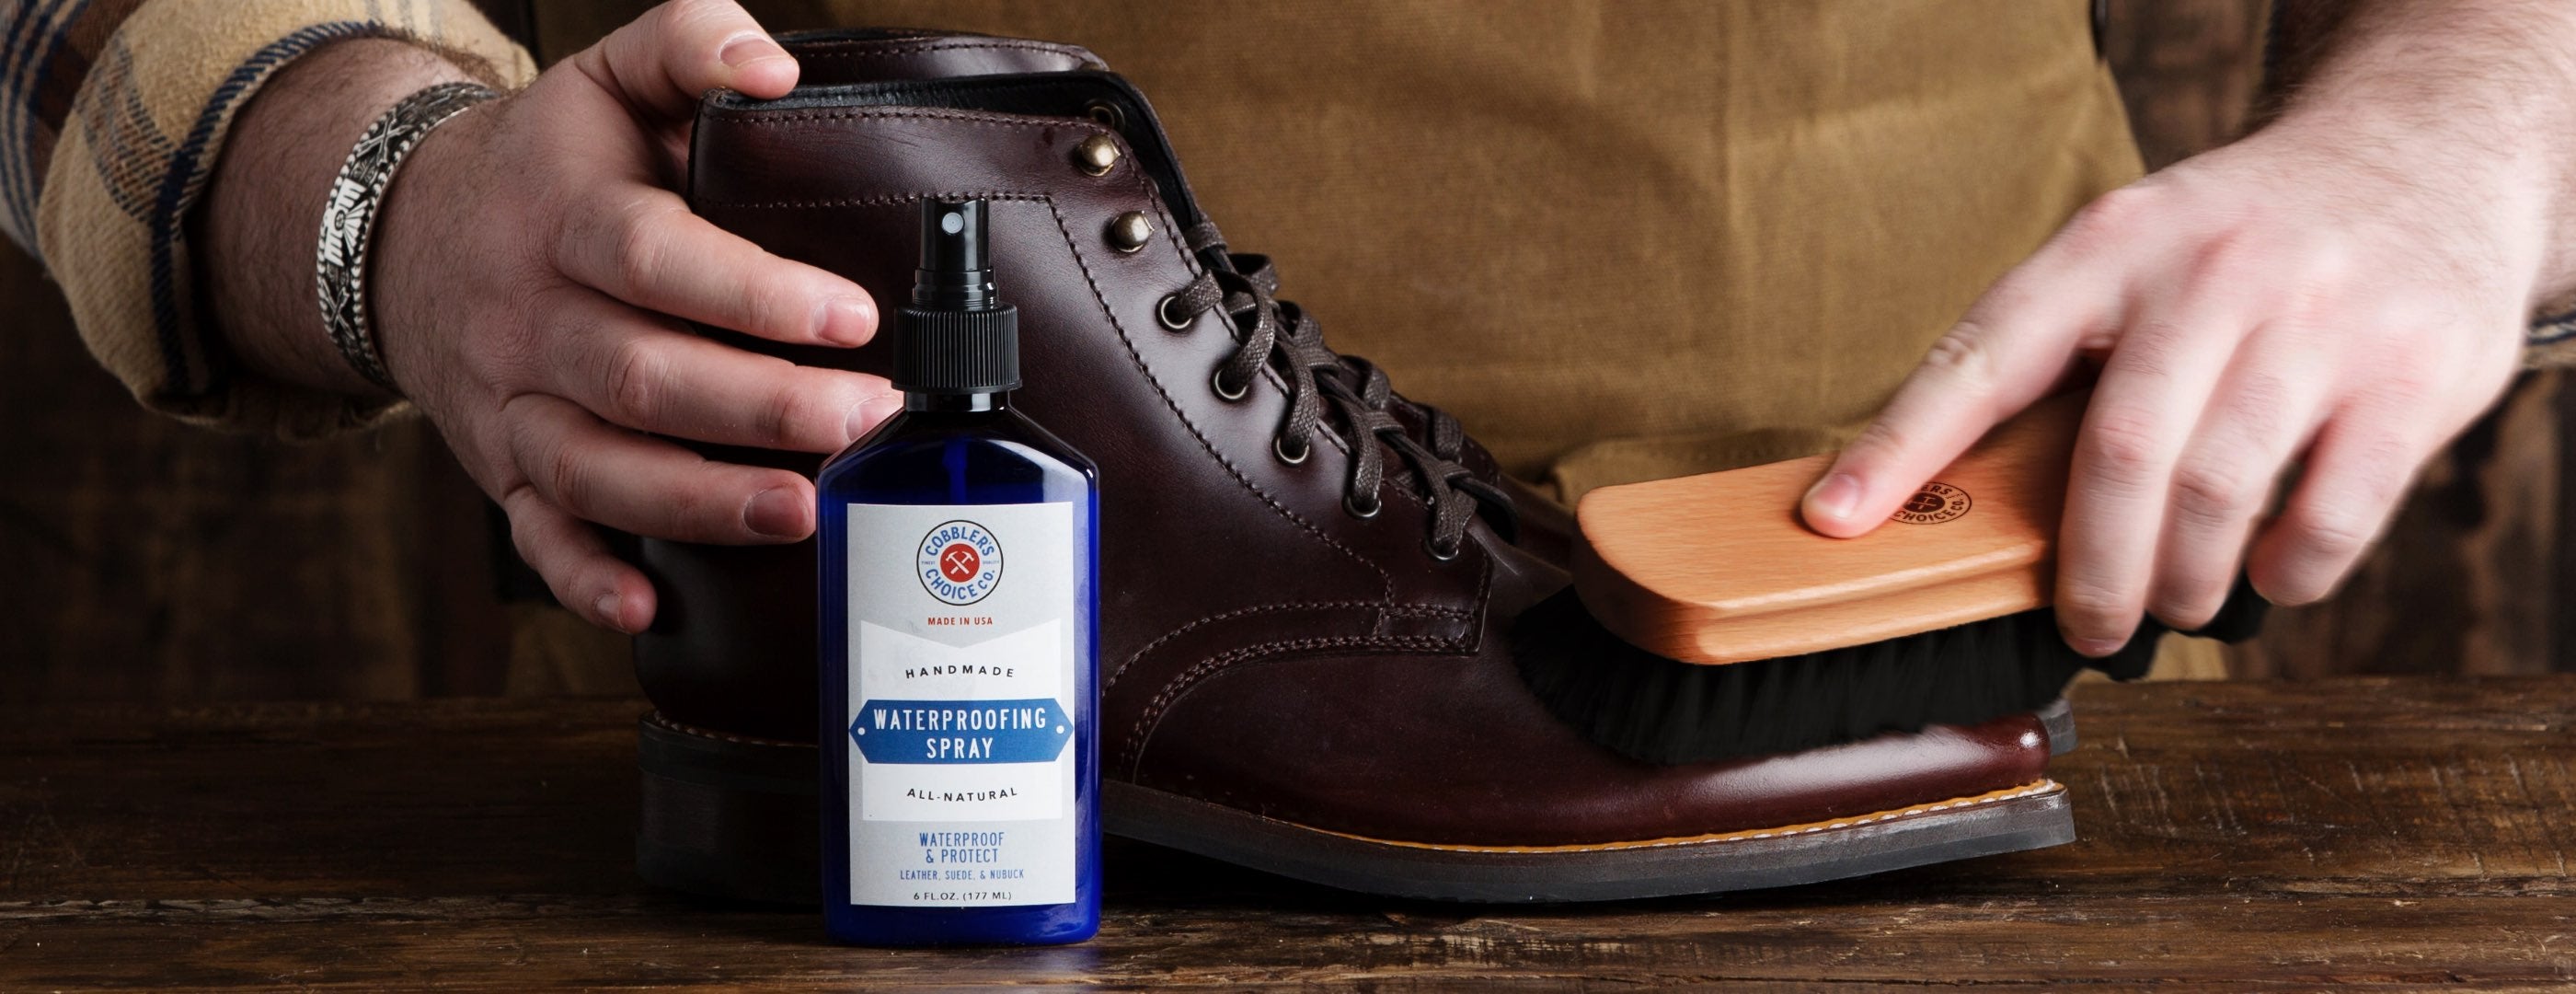 Waterproofing spray for shoes 250 ml, sustainable waterproofing